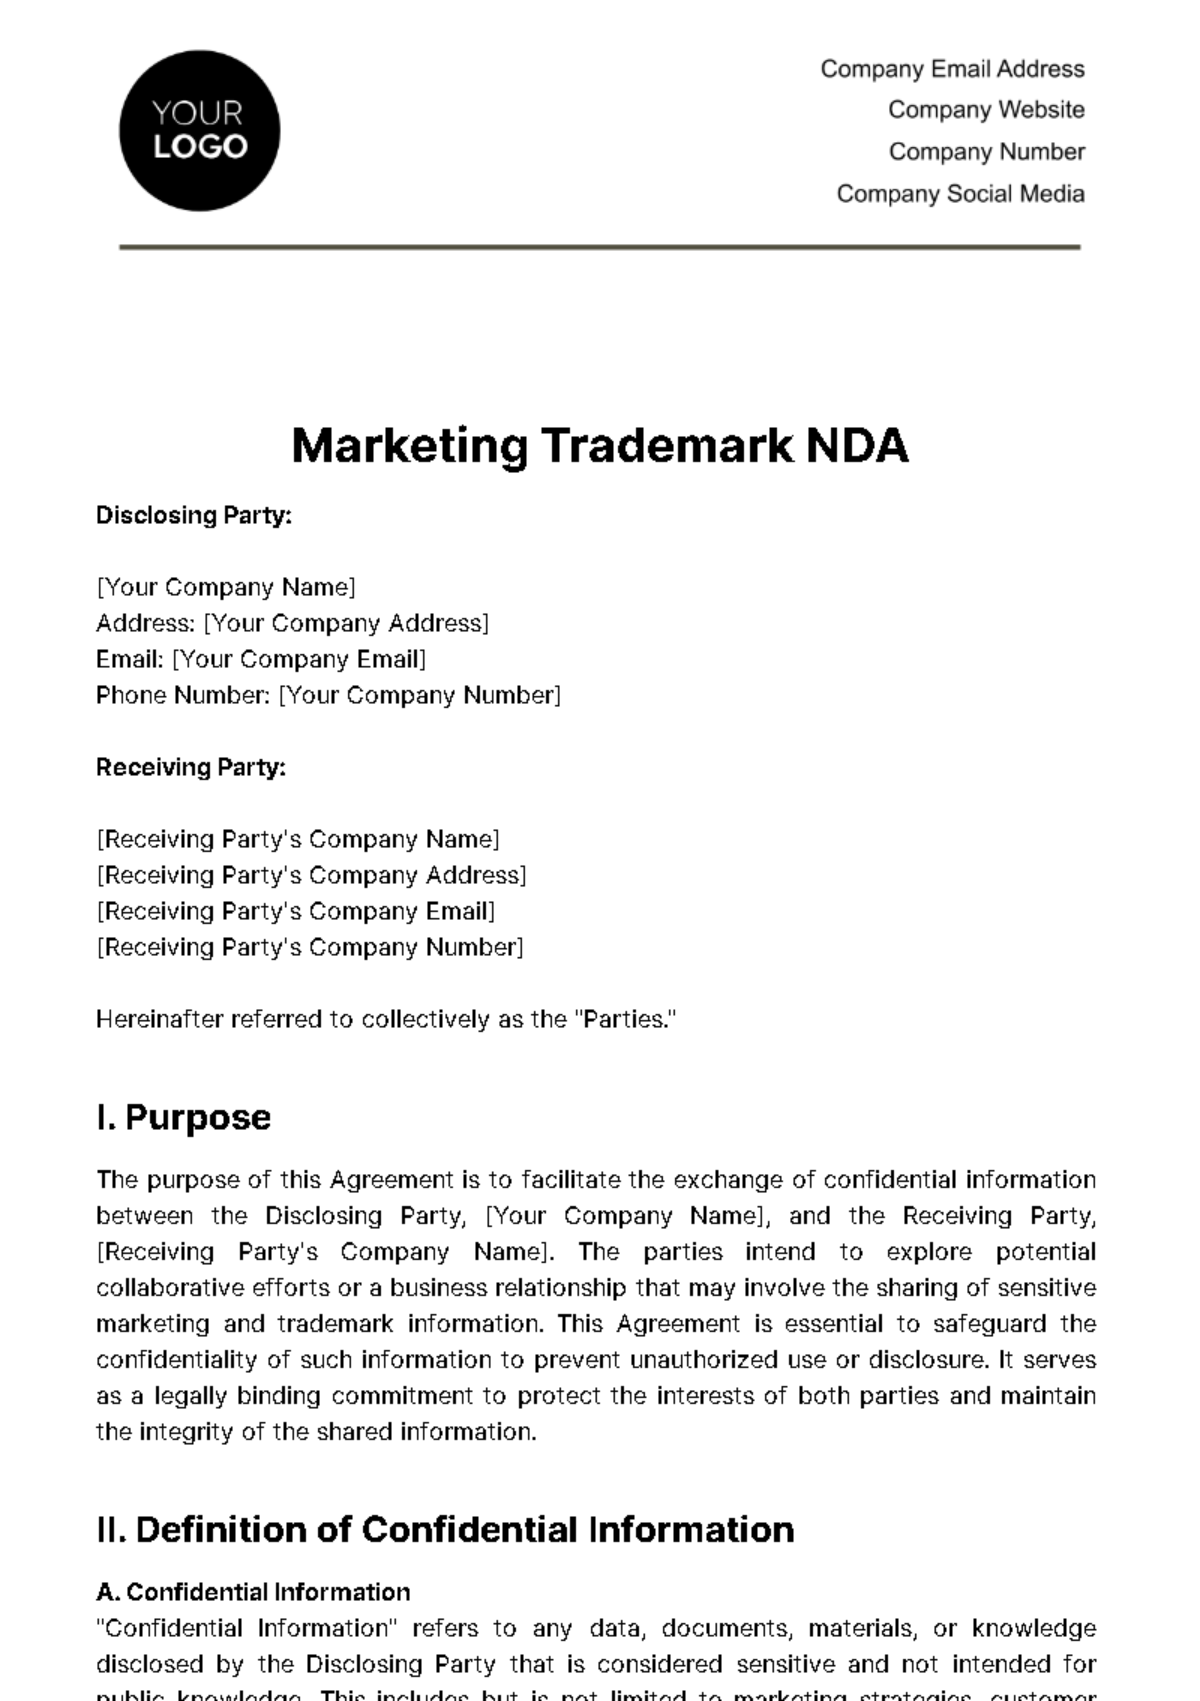 Marketing Trademark NDA Template